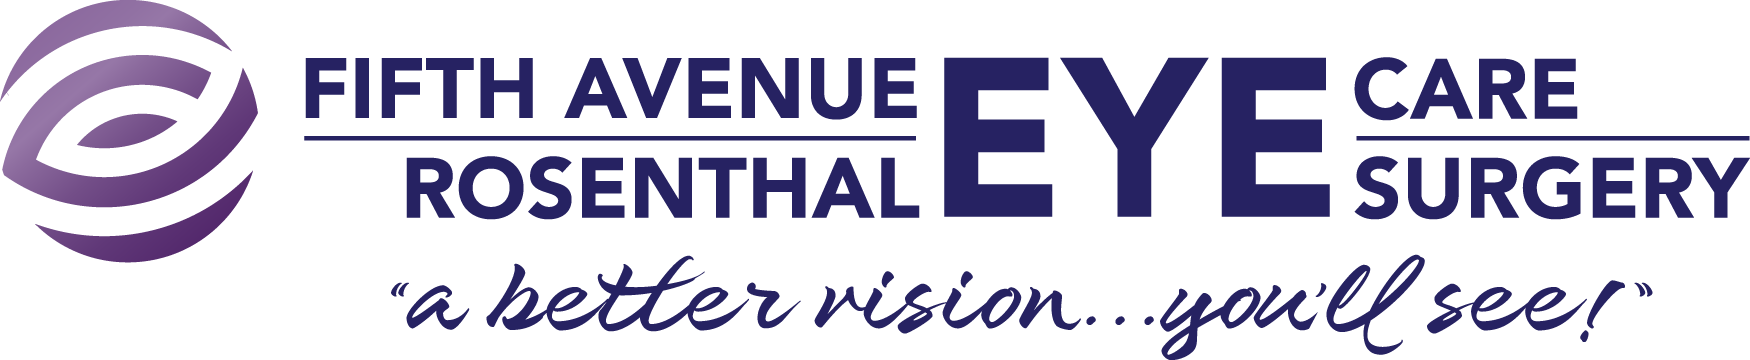 Rosenthal Eye Surgery & Fifth Avenue Eye Care Logo